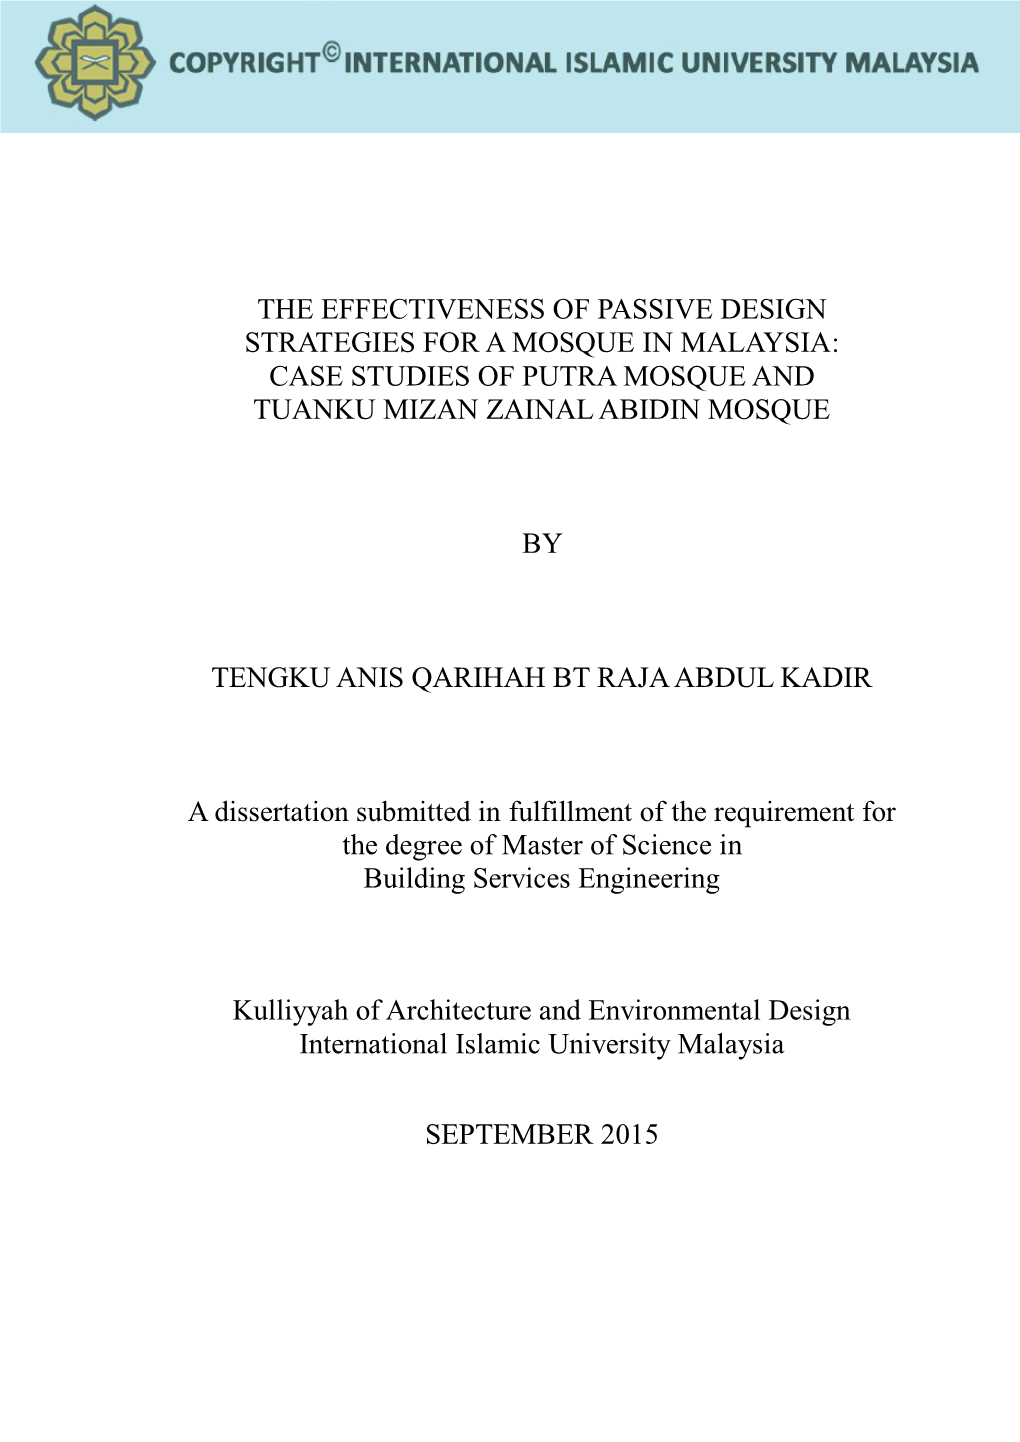 Case Studies of Putra Mosque and Tuanku Mizan Zainal Abidin Mosque